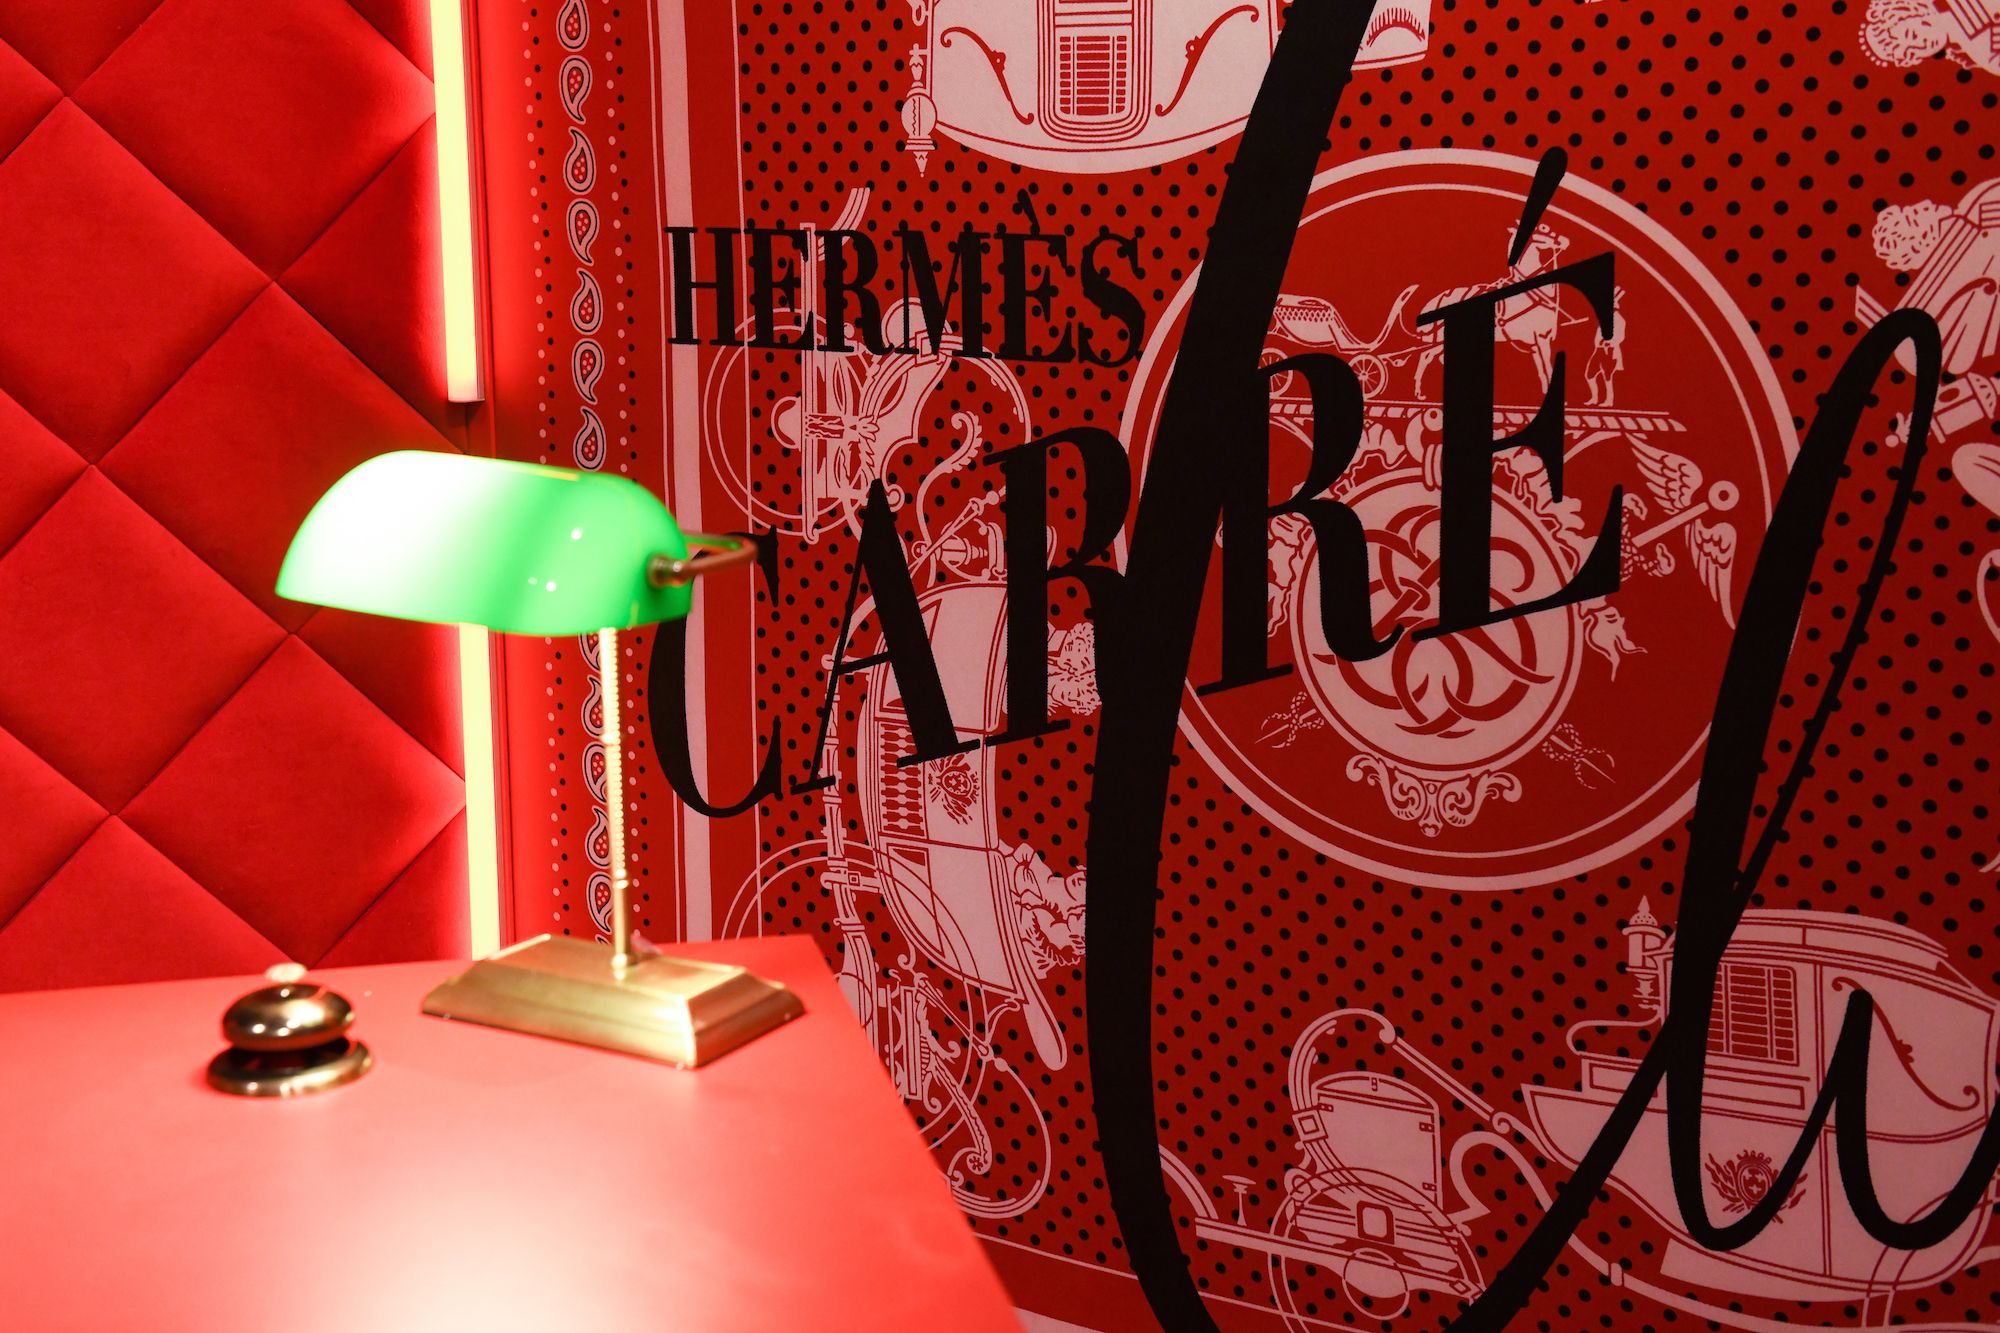 Hermès Carré Club: PRIVATE FOREVER